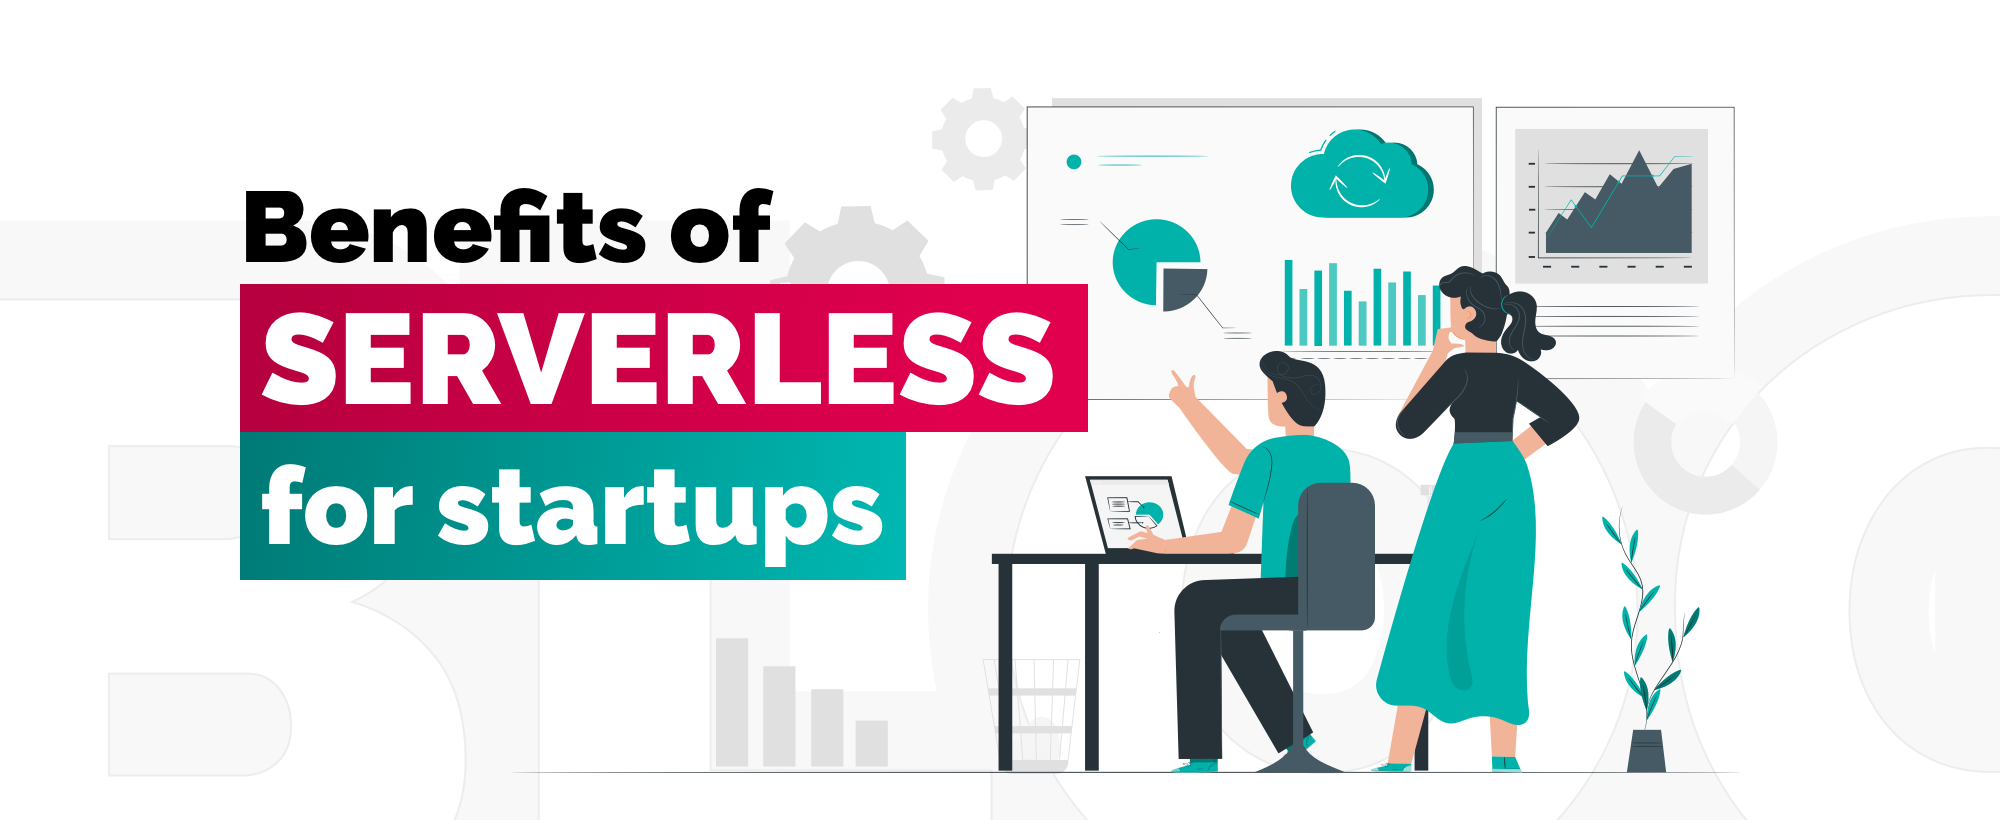 Benefits of Serverless for Startups